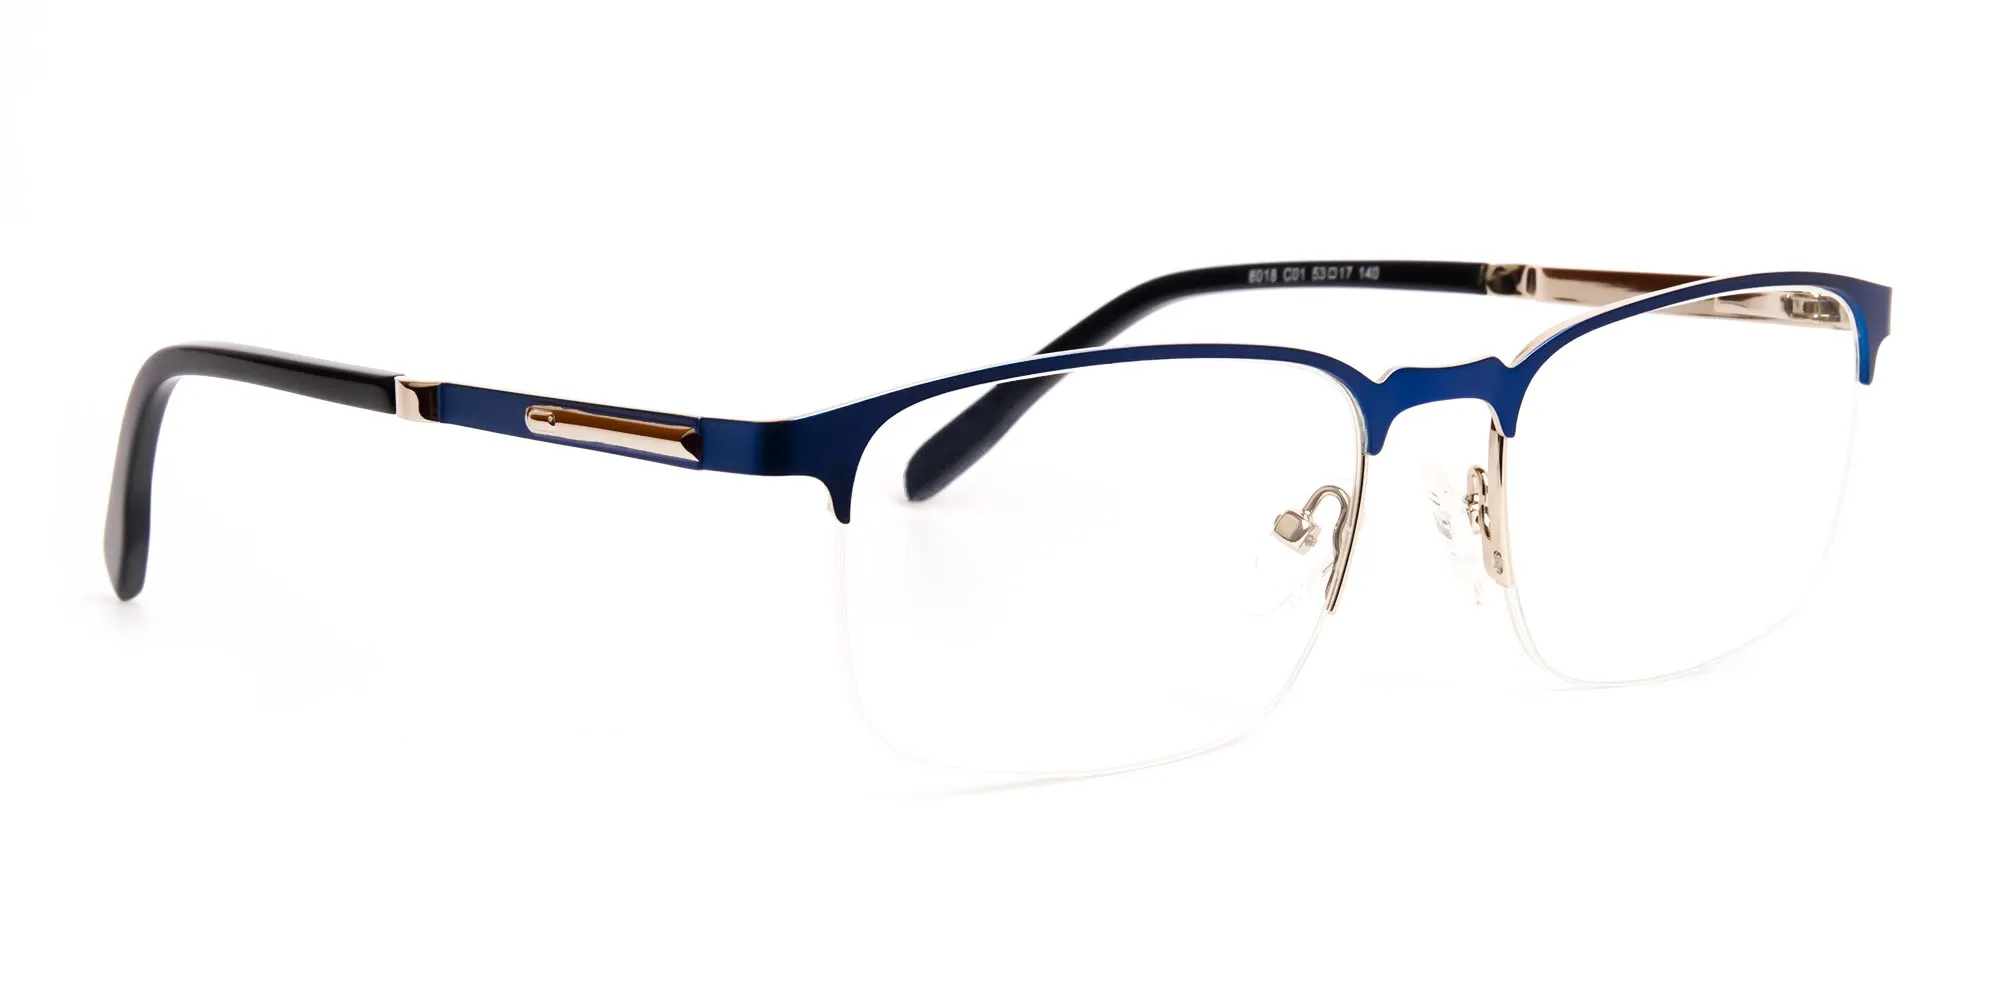 dark and navy blue rectangular half rim glasses frames -2